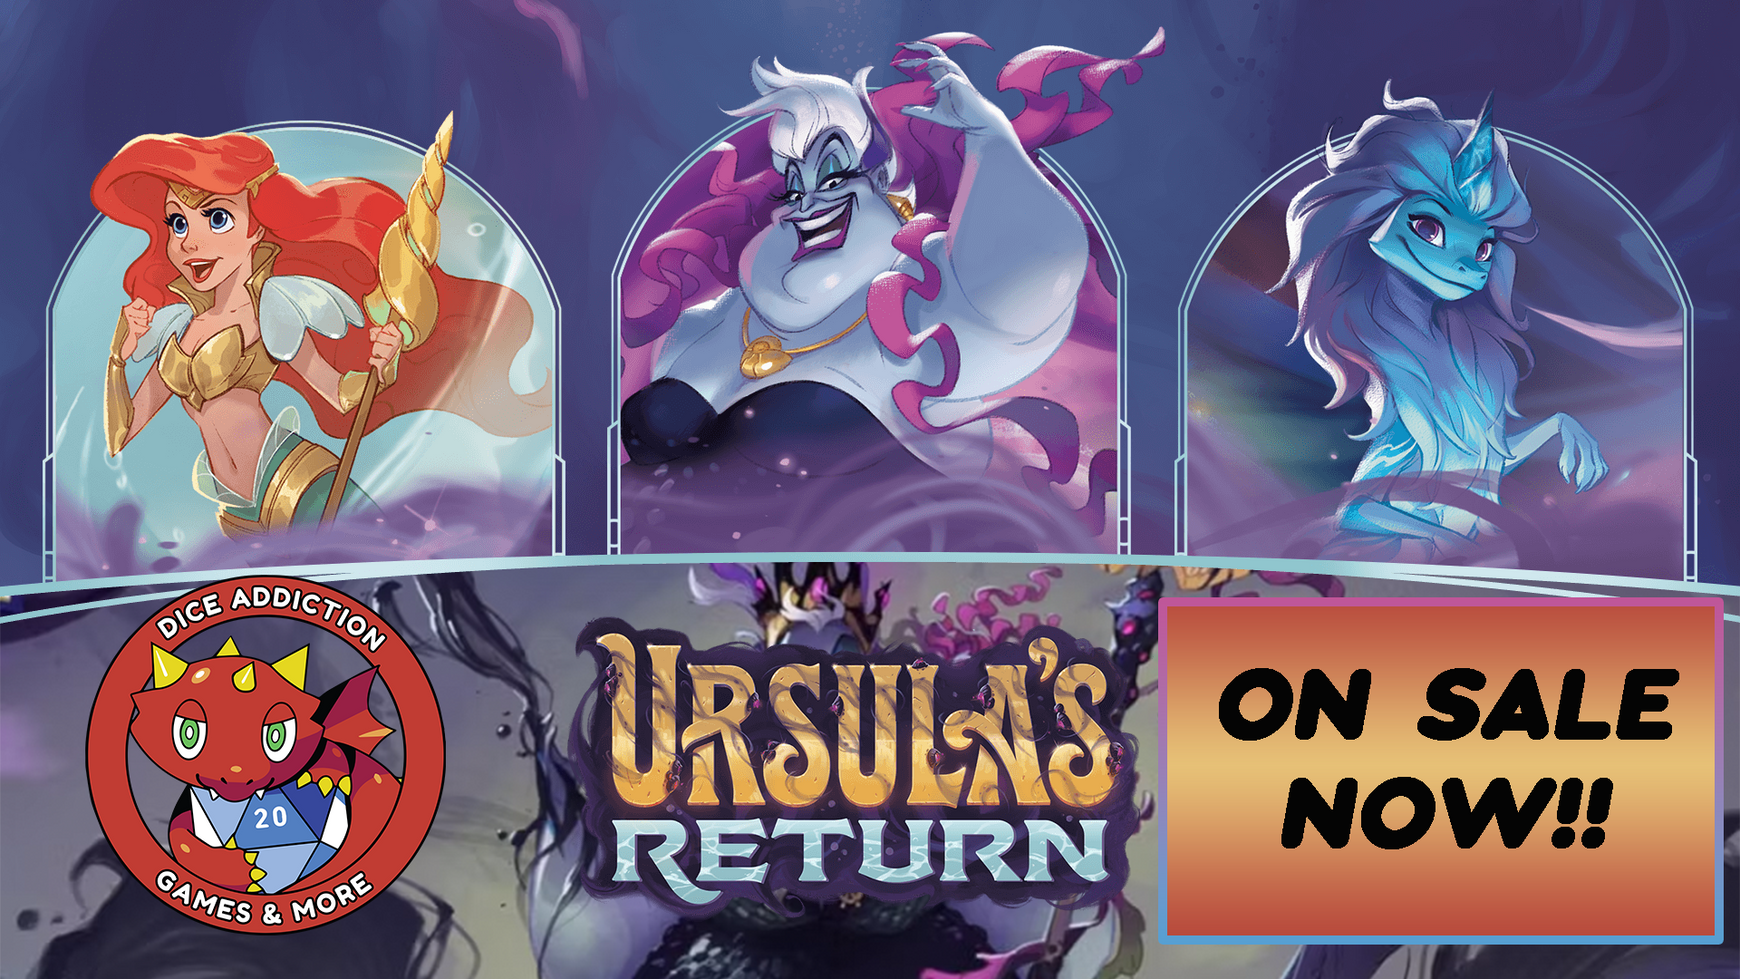 Ursula's Return Arrives at Dice Addiction